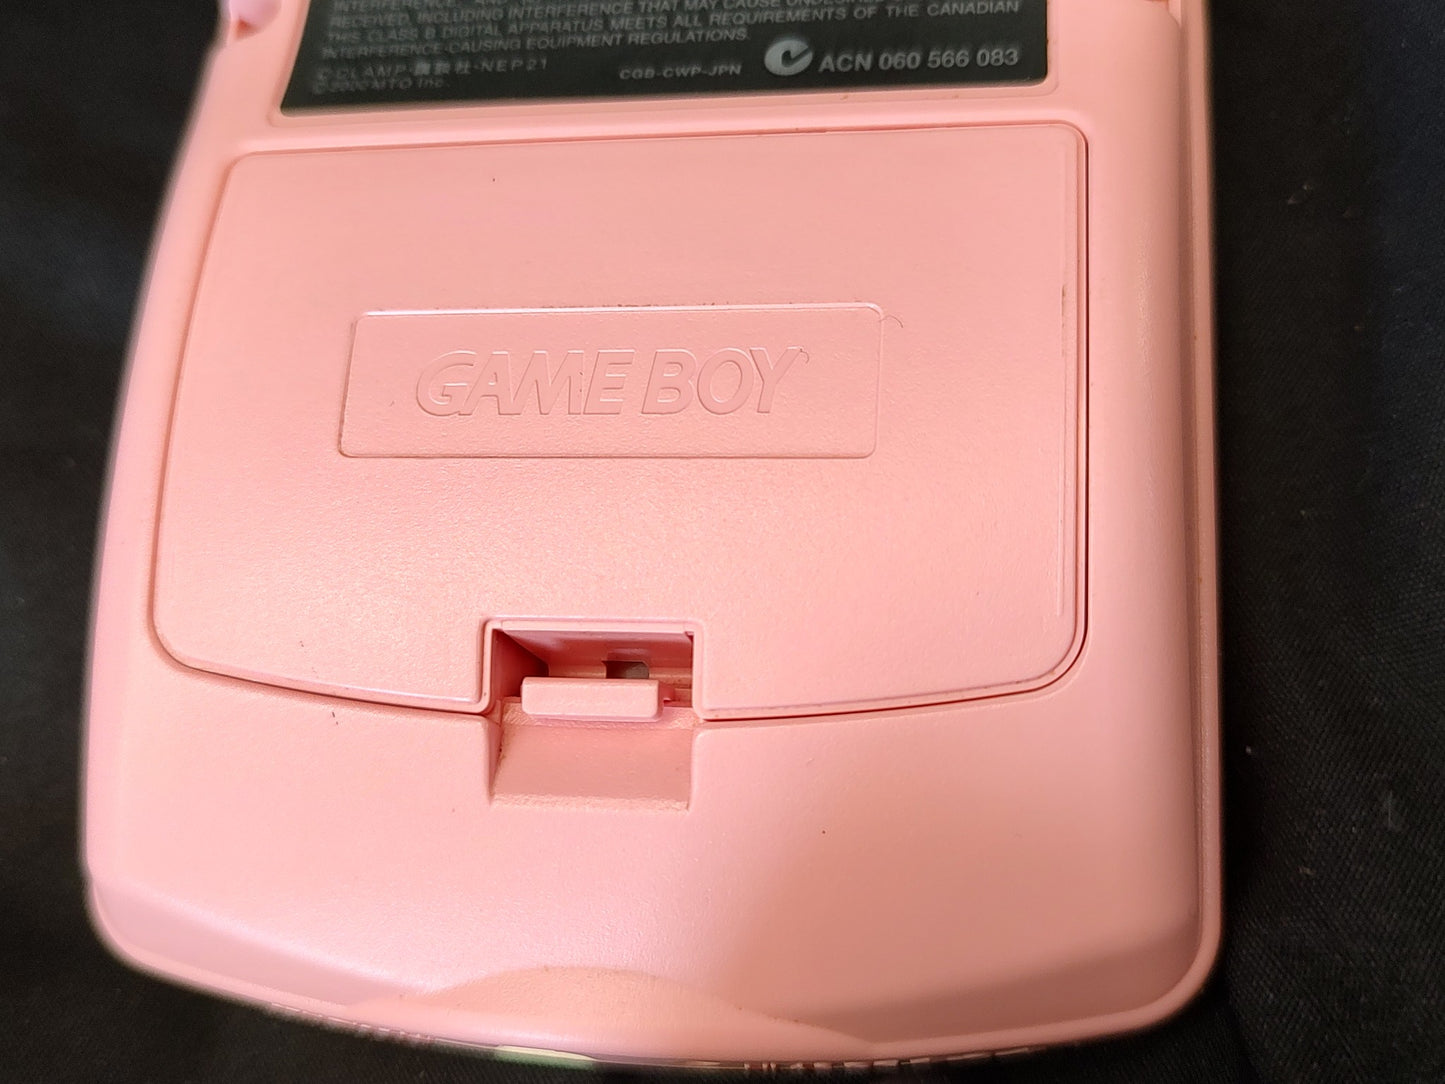 Nintendo Gameboy Color CARD CAPTOR SAKURA Limited edition console Boxed -g0122-